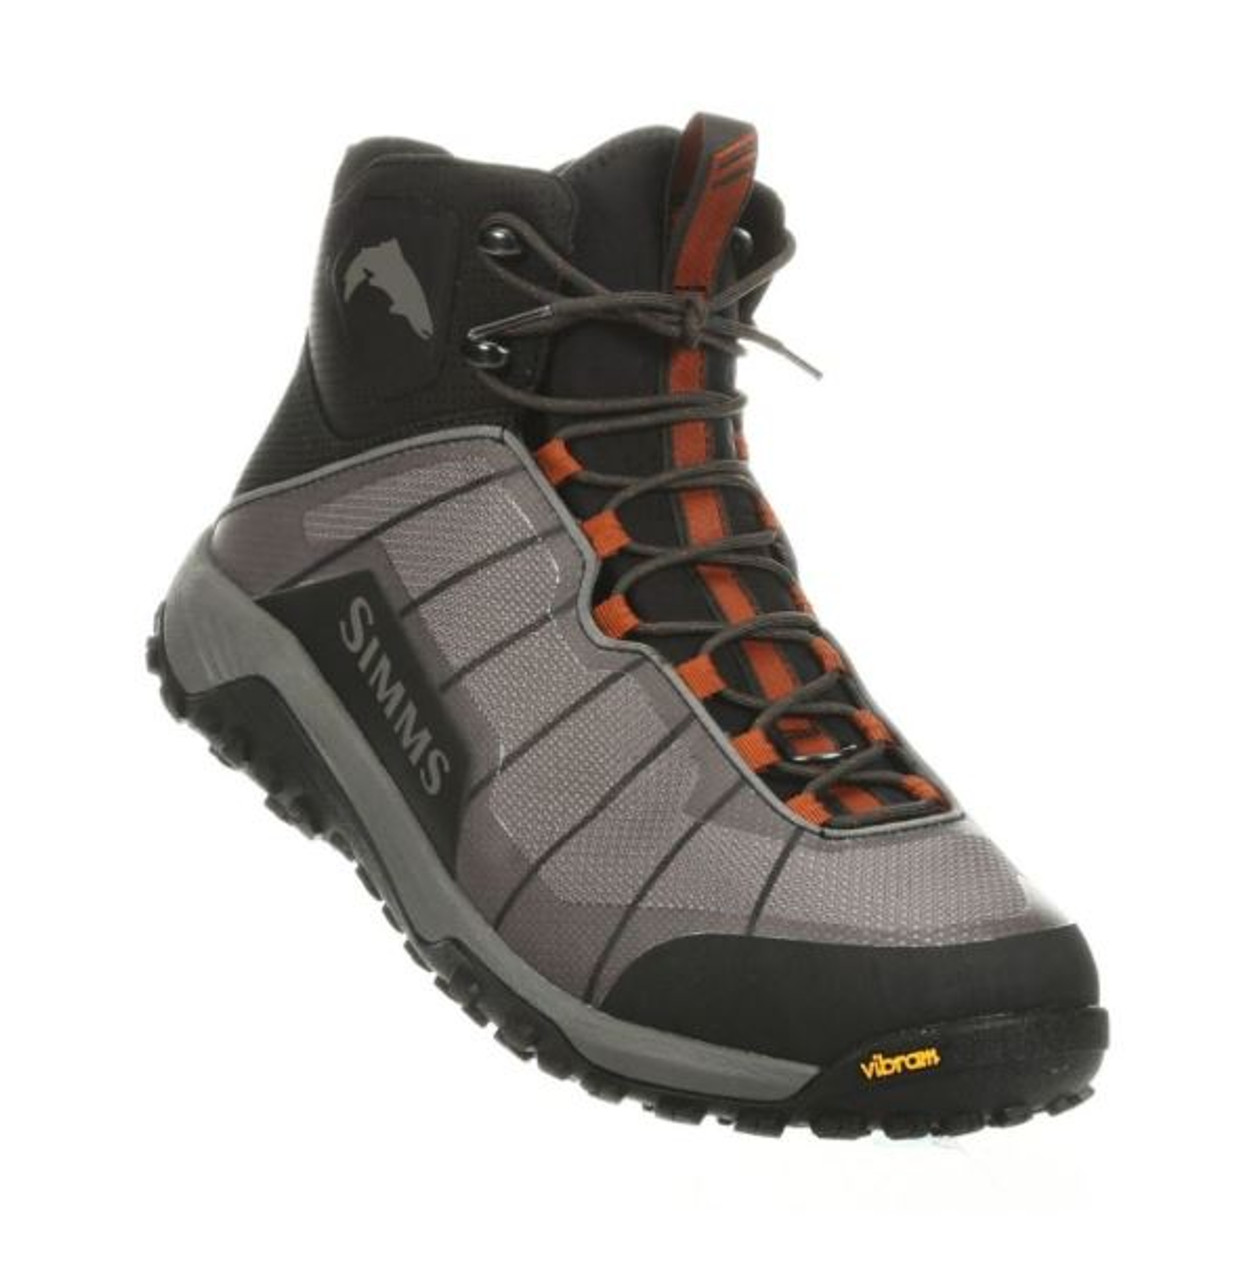 Flyweight Wading Boot - Vibram Sole (Size 14) - Steel Grey